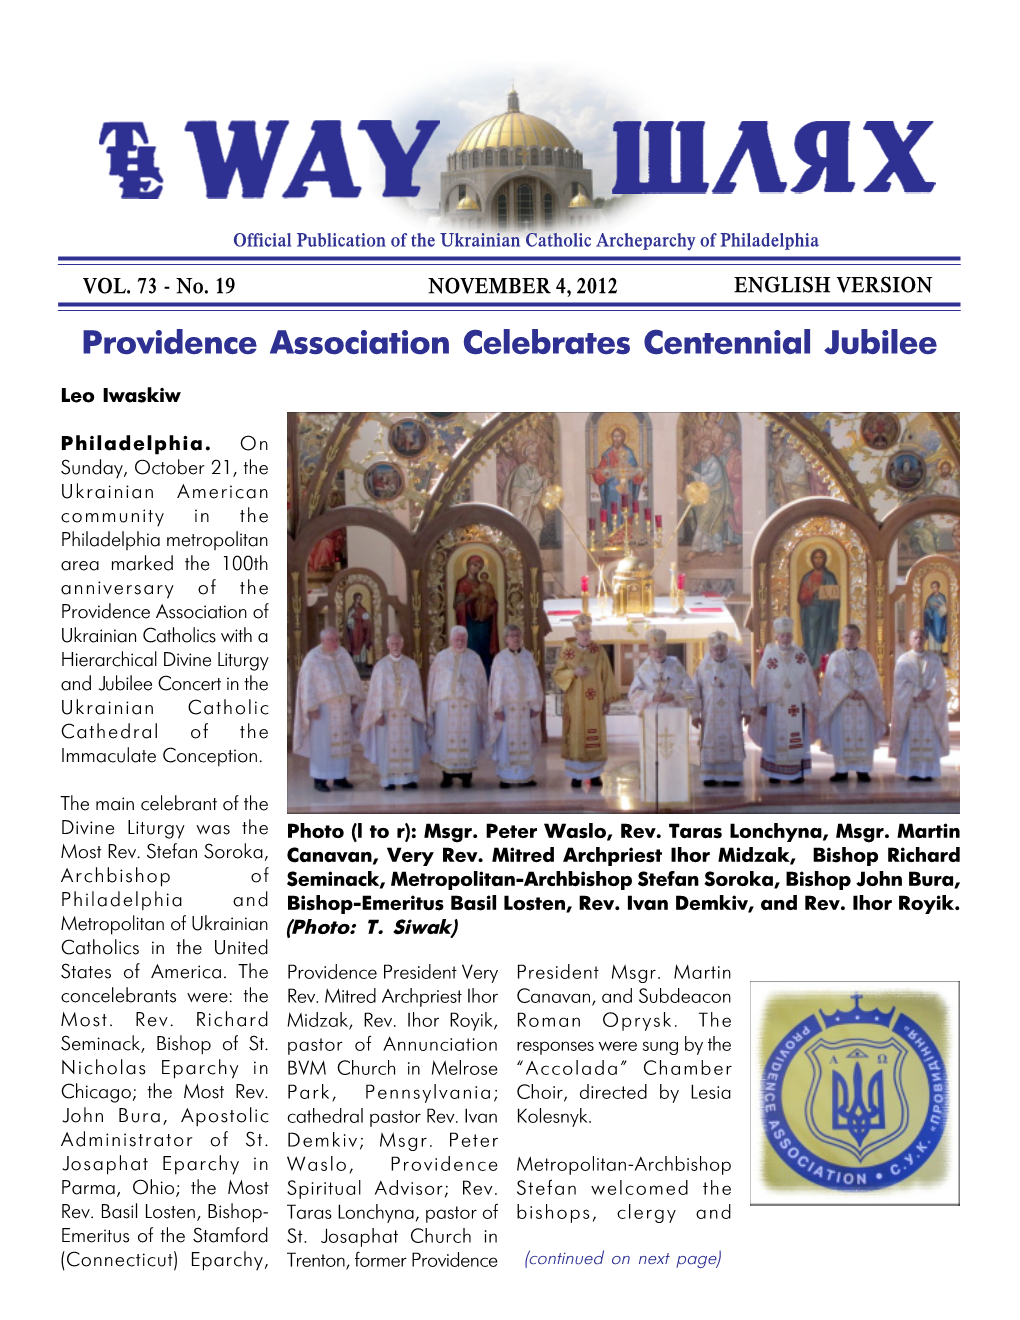 Providence Association Celebrates Centennial Jubilee